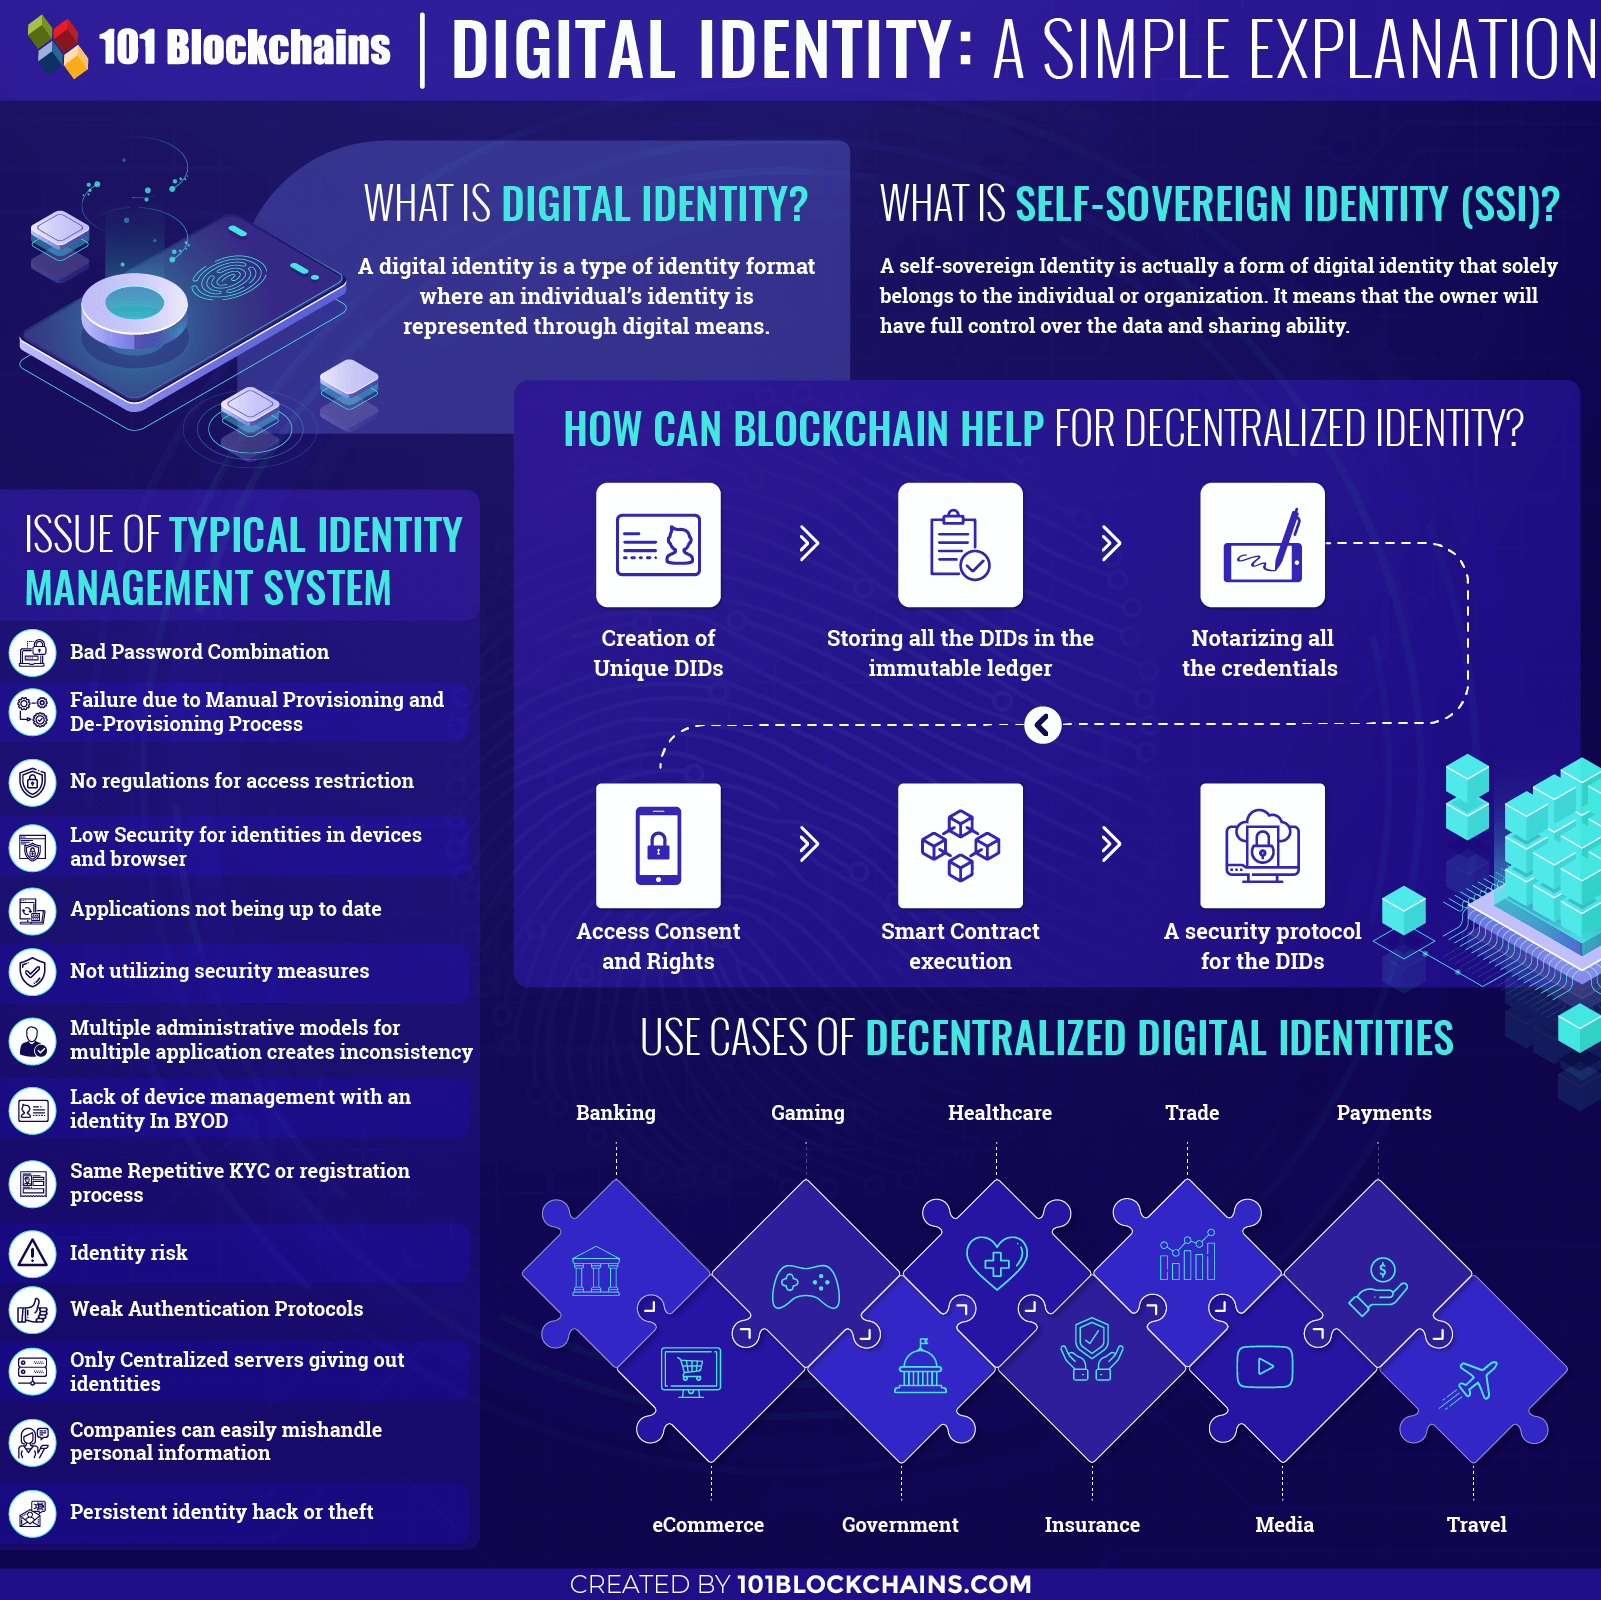 Digital Identity: A Simple Explanation